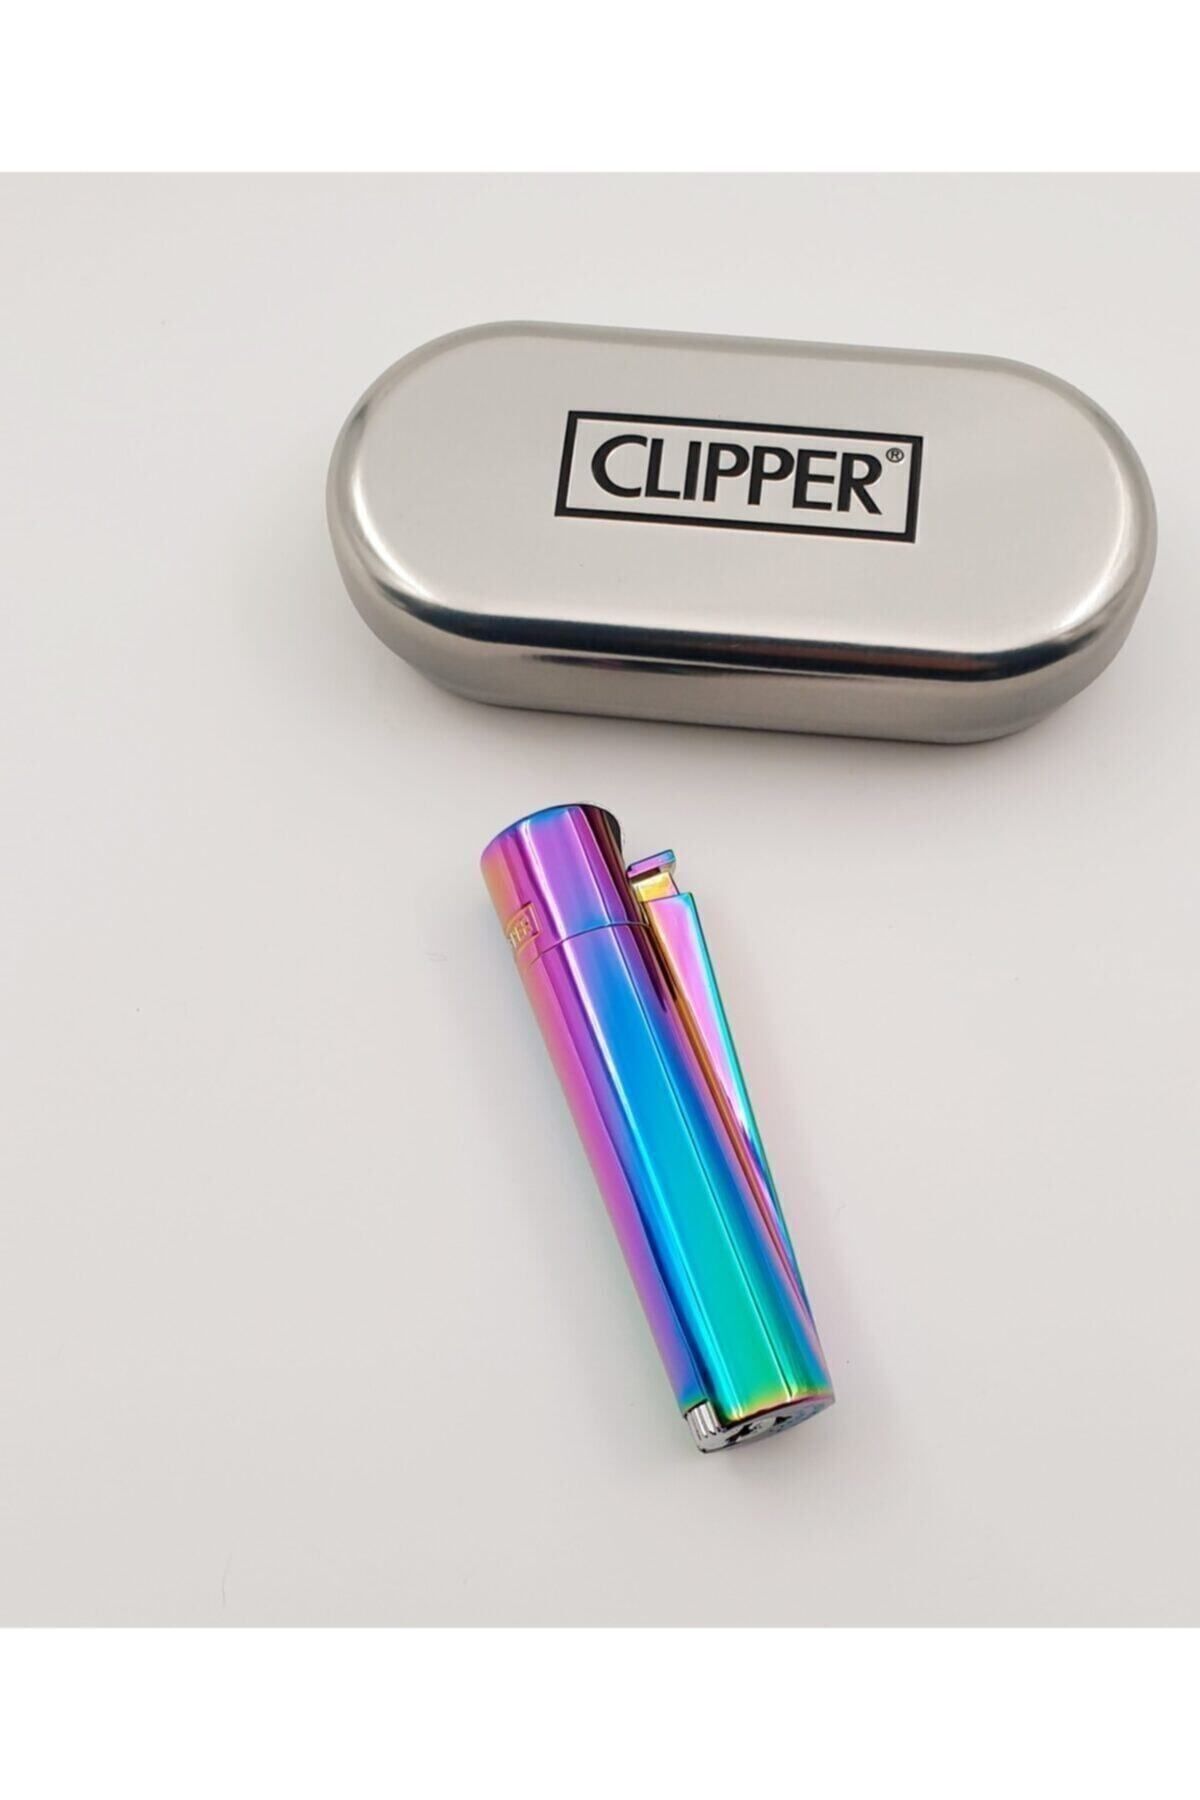 Clipper Metal Gökkuşağı Renkli Çakmak Metal Kutulu